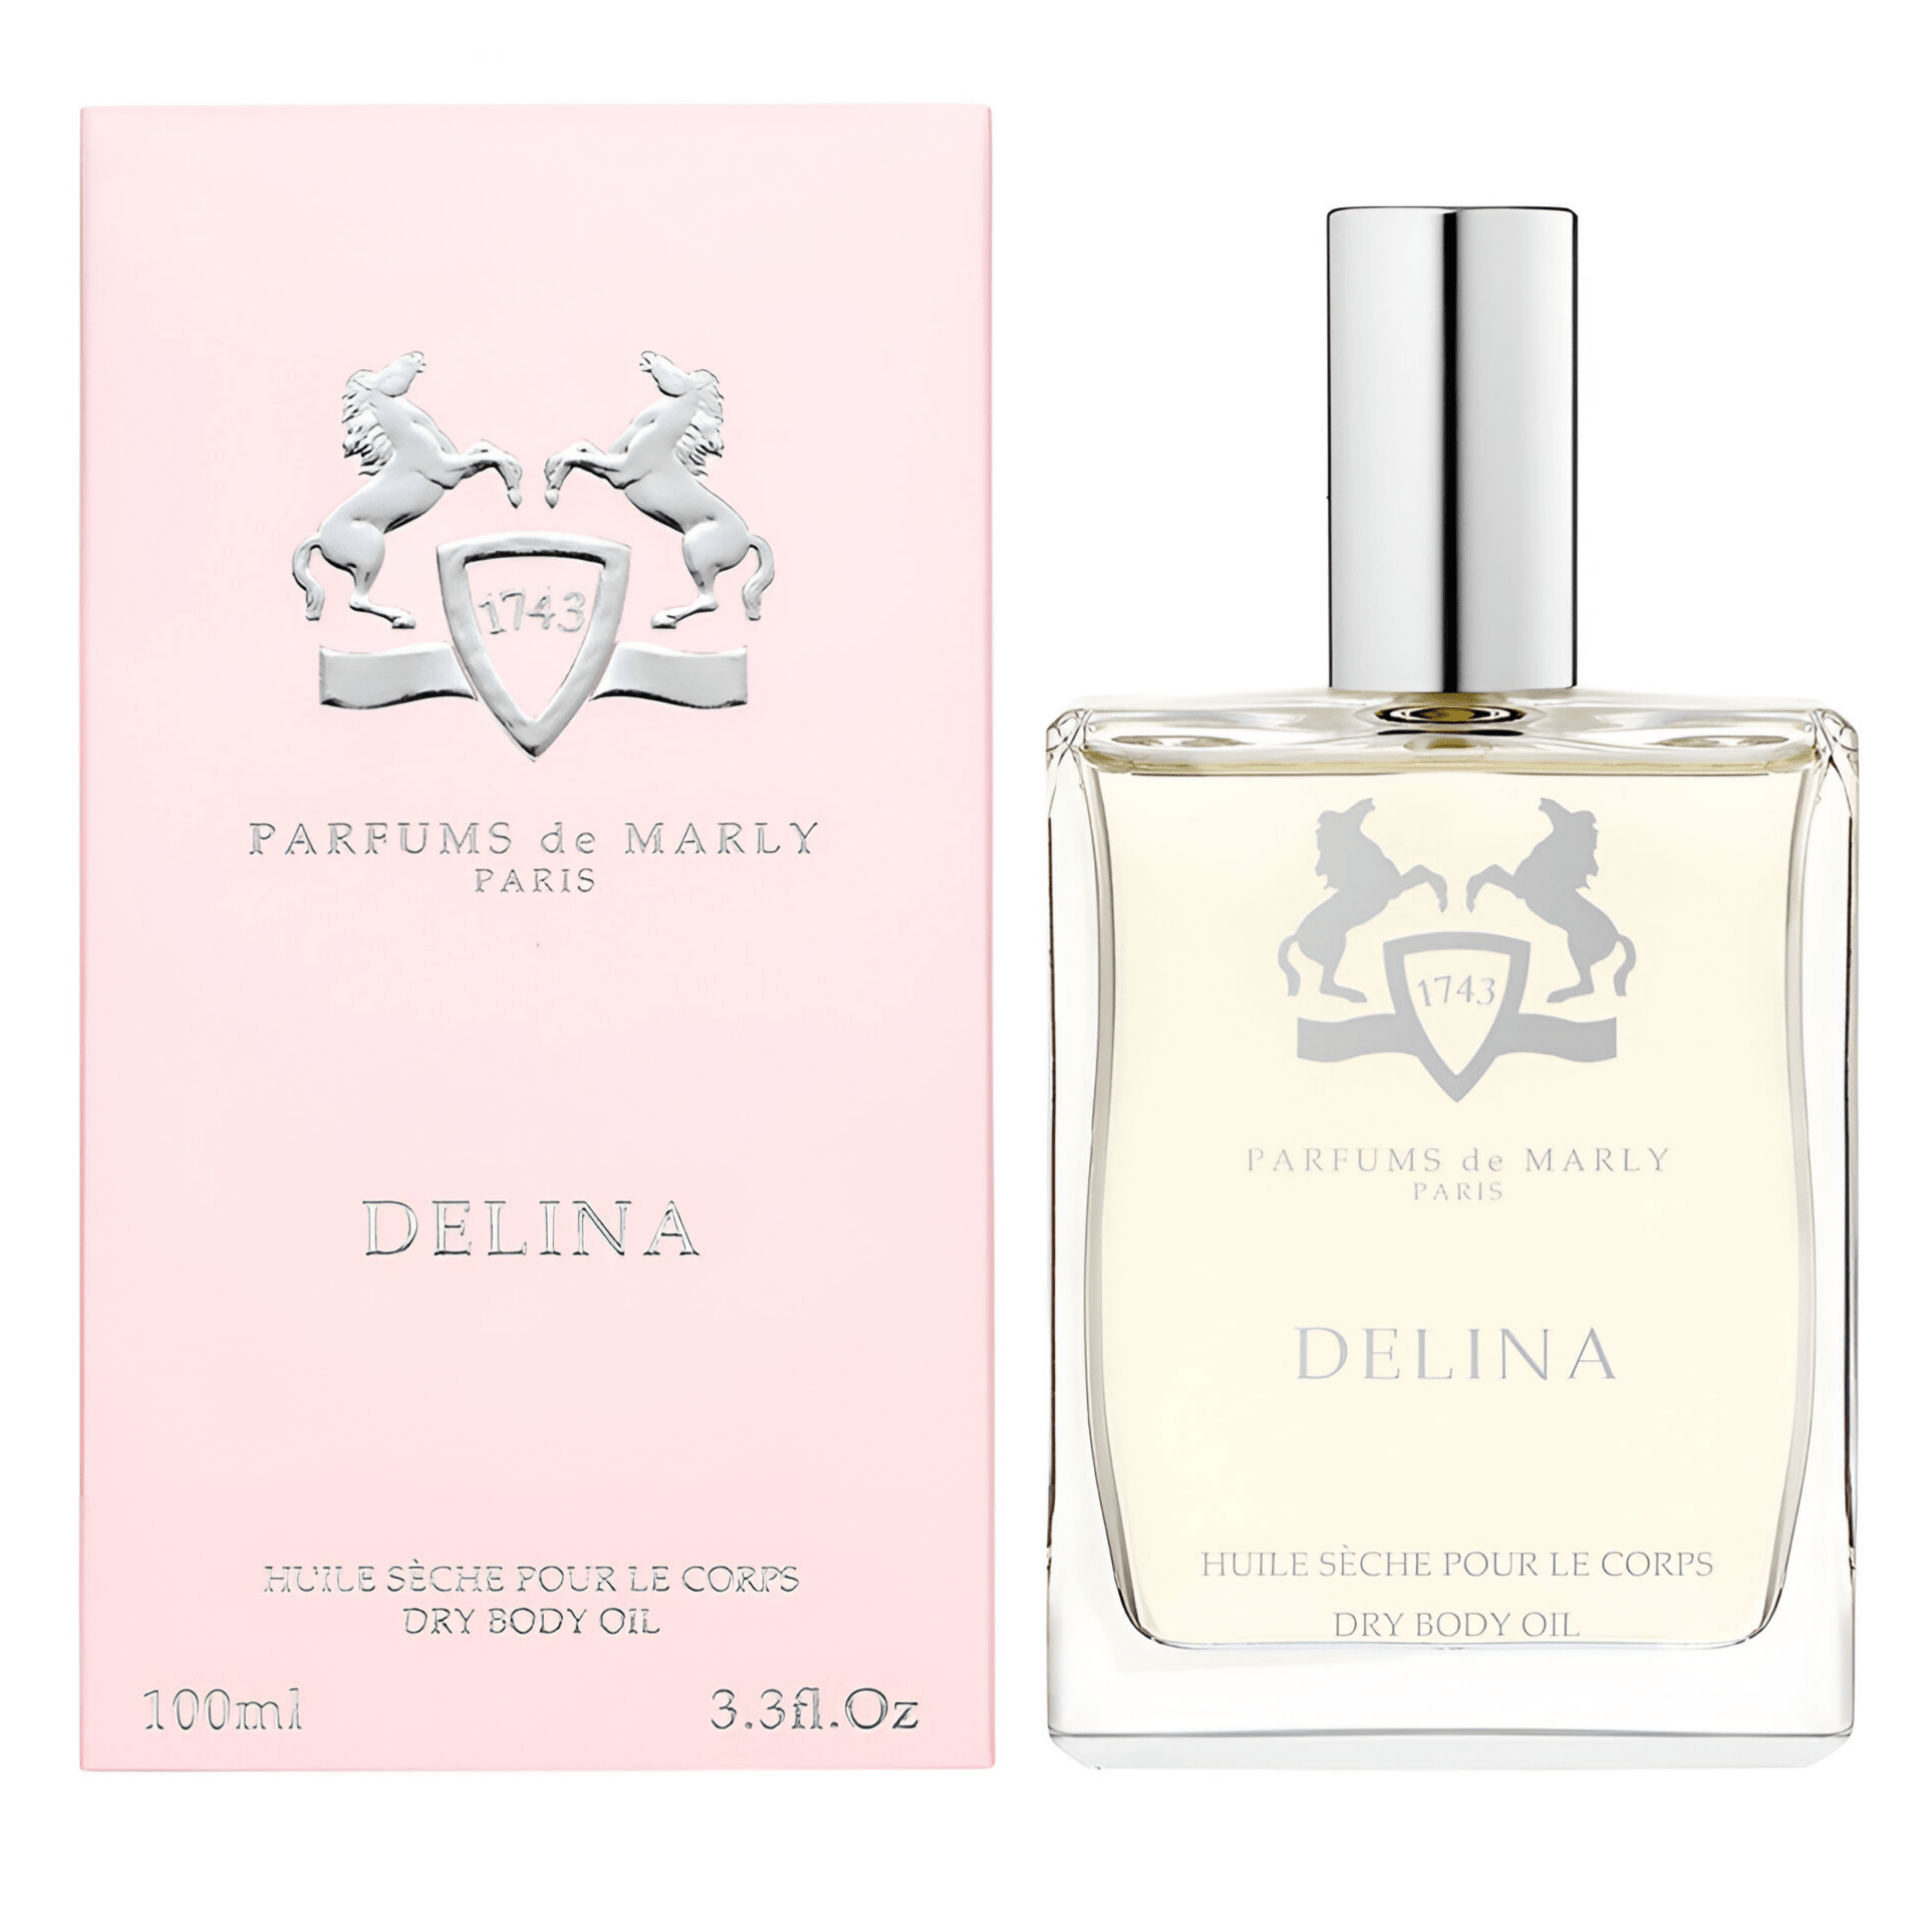 Parfums De Marly Delina Dry Body Oil | My Perfume Shop Australia